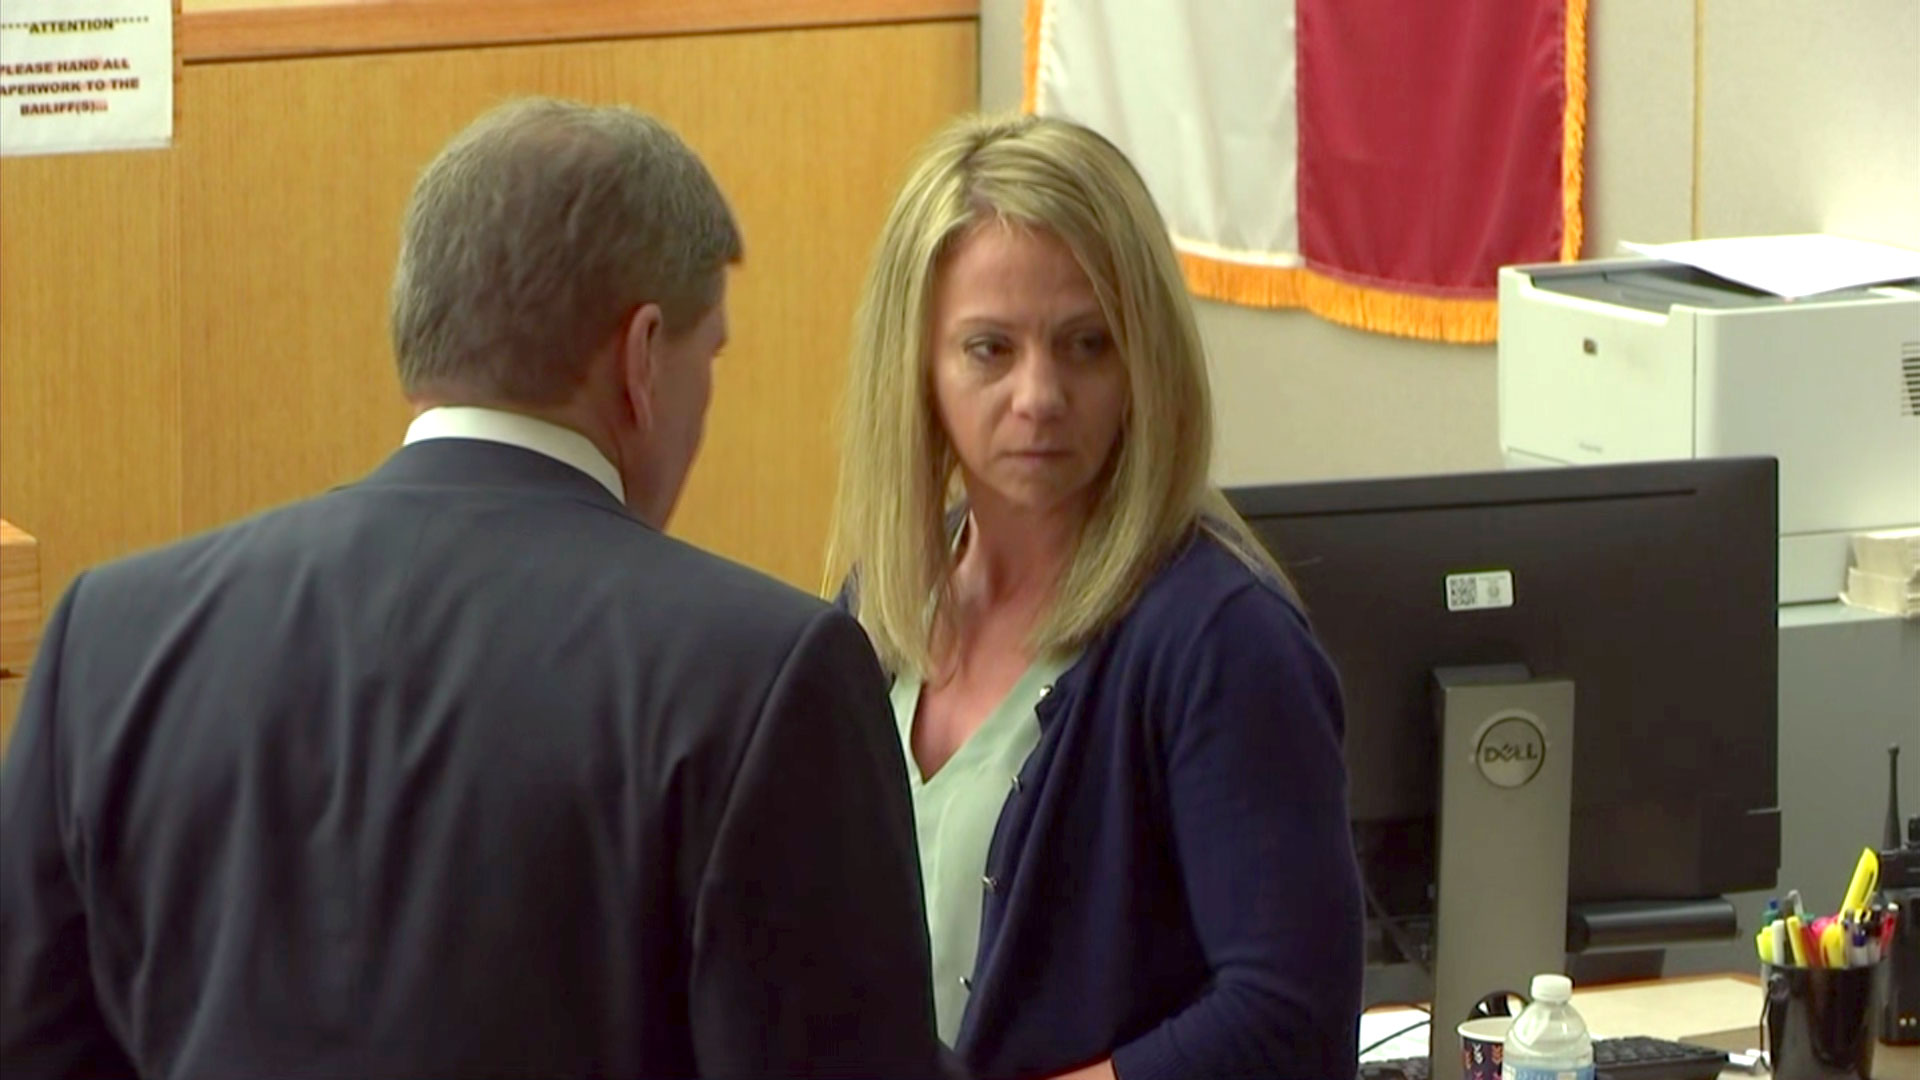 Criminal Defense Attorney Discusses Guyger's Guilty Verdict